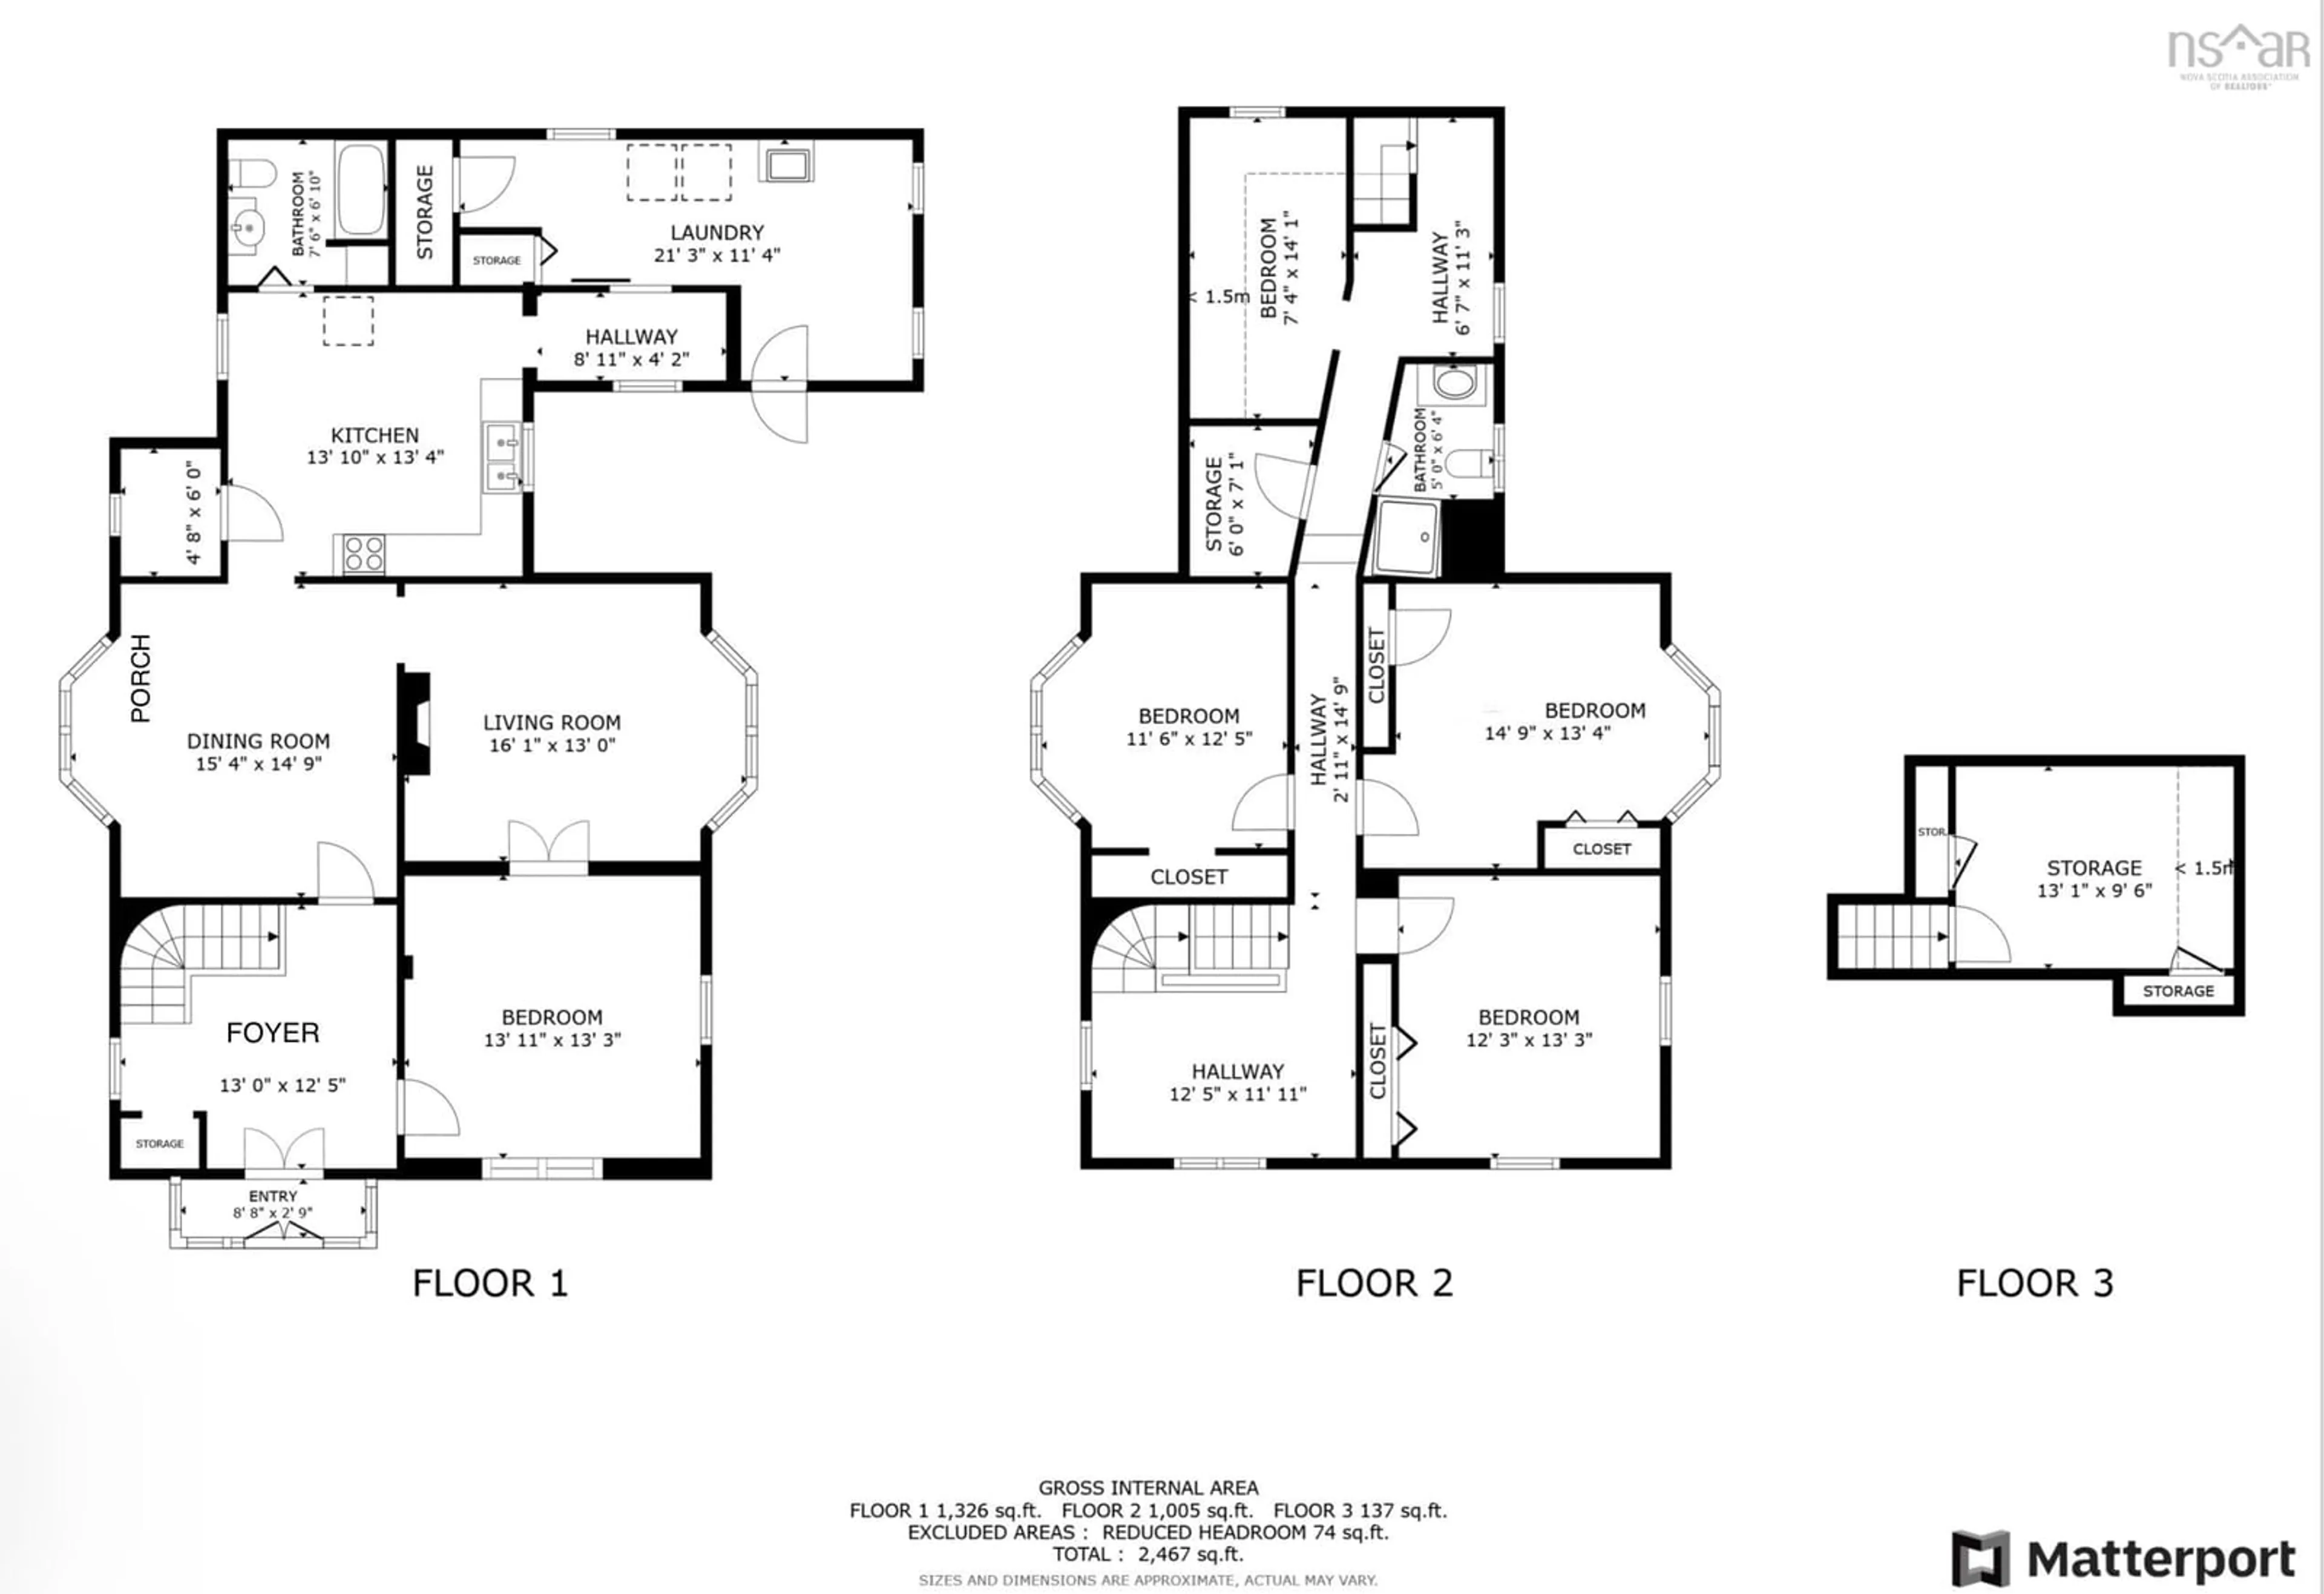 Floor plan for 45 Alma St, Yarmouth Nova Scotia B5A 3G7